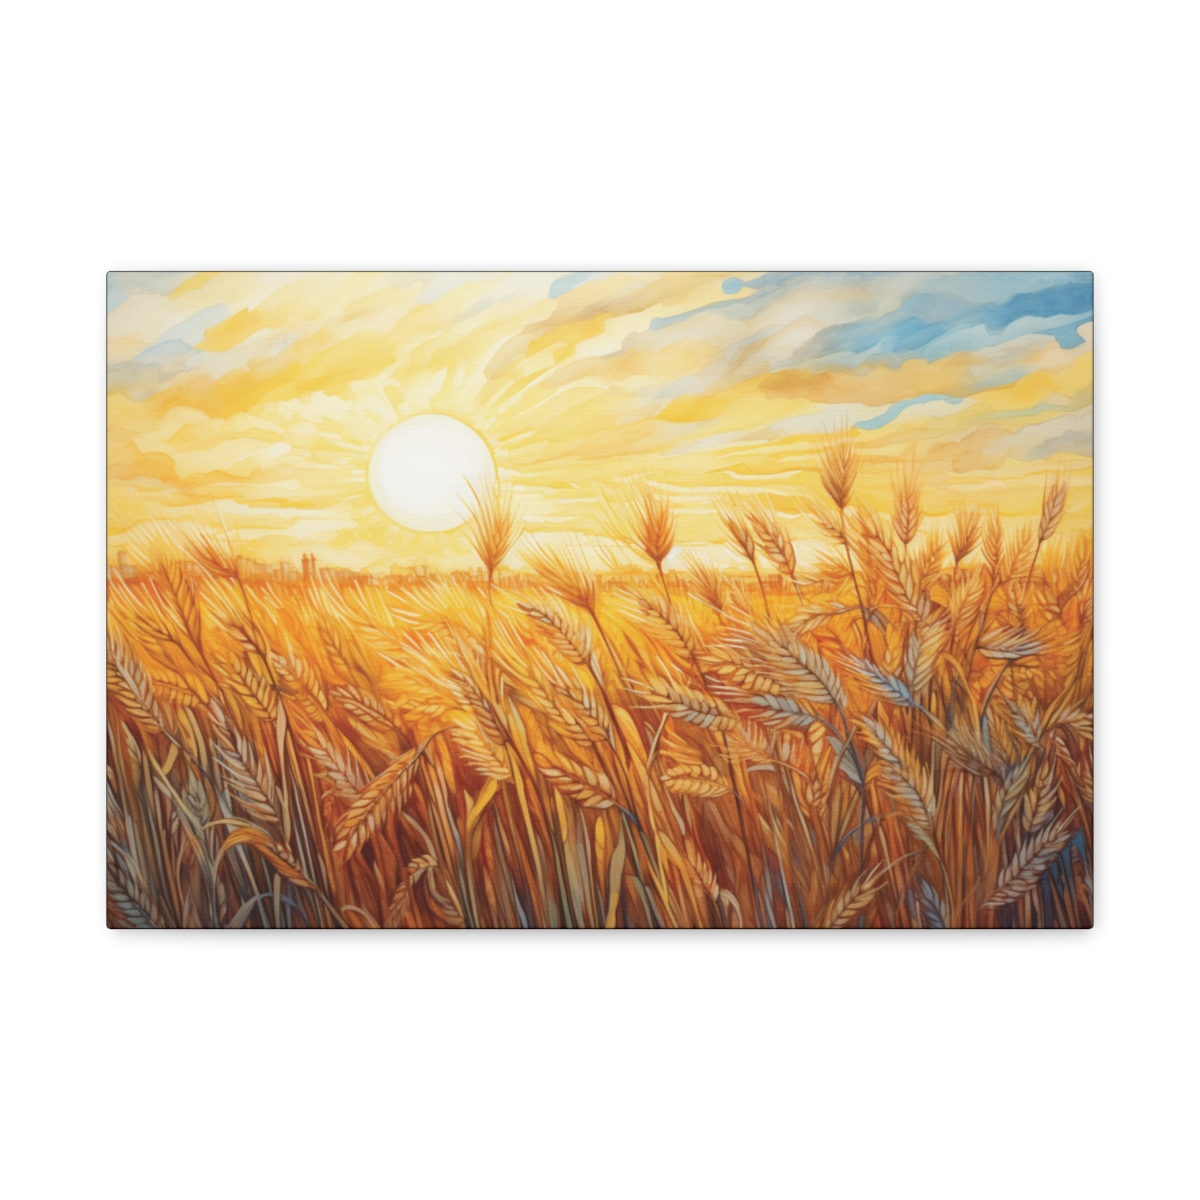 Boho Sun Art Canvas Print: Guiding Light Of The Morning